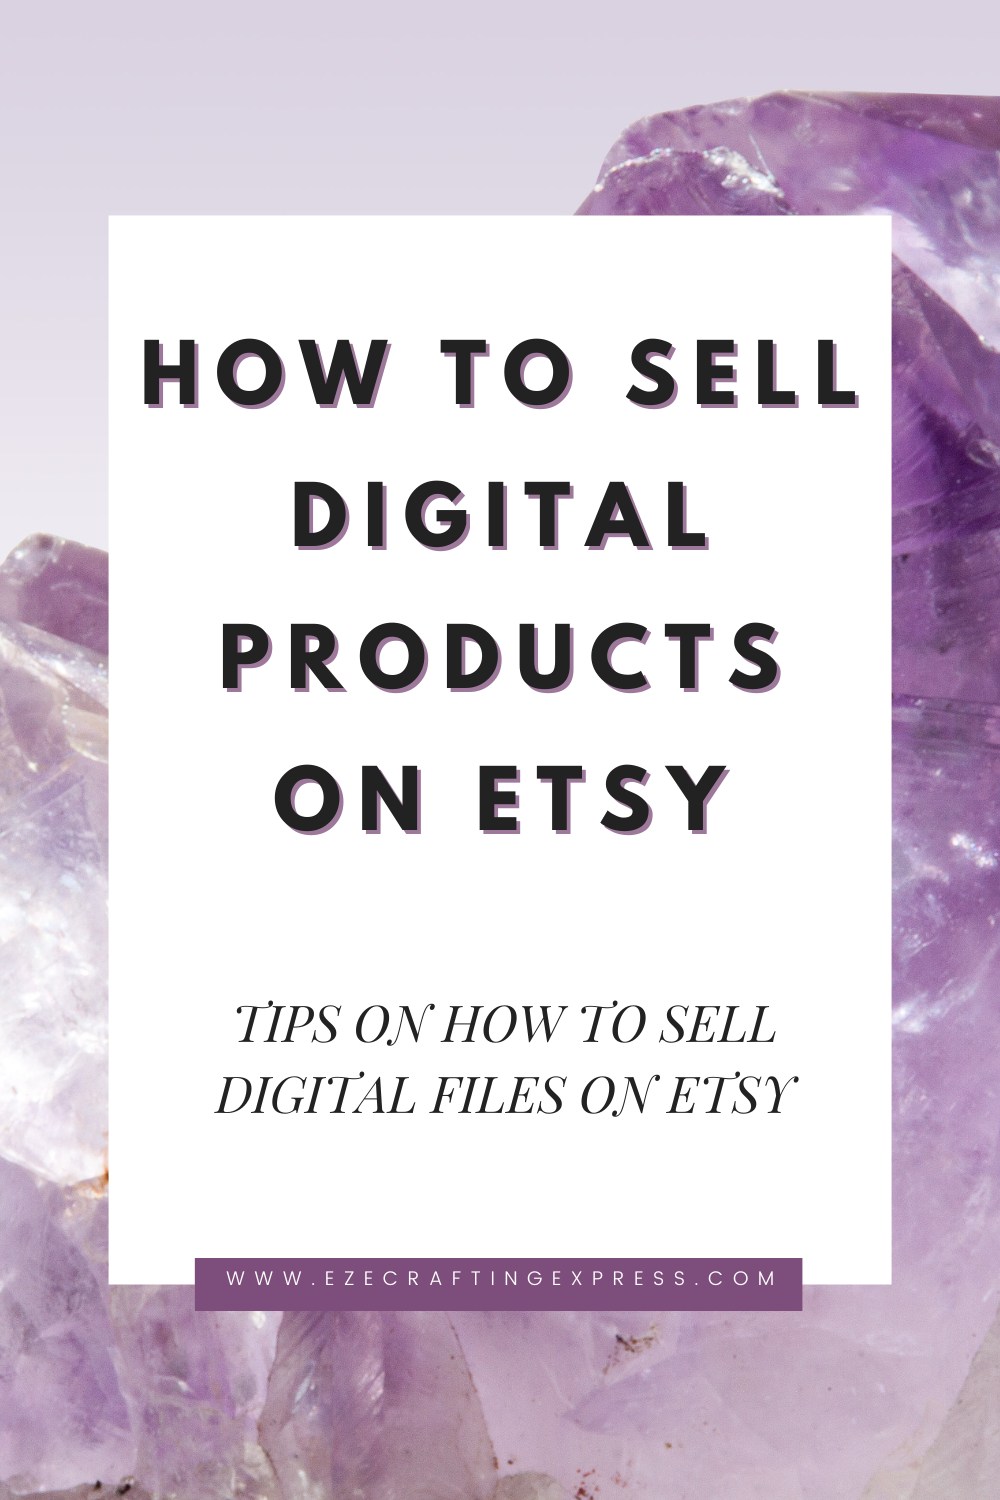 Selling digital files on Etsy